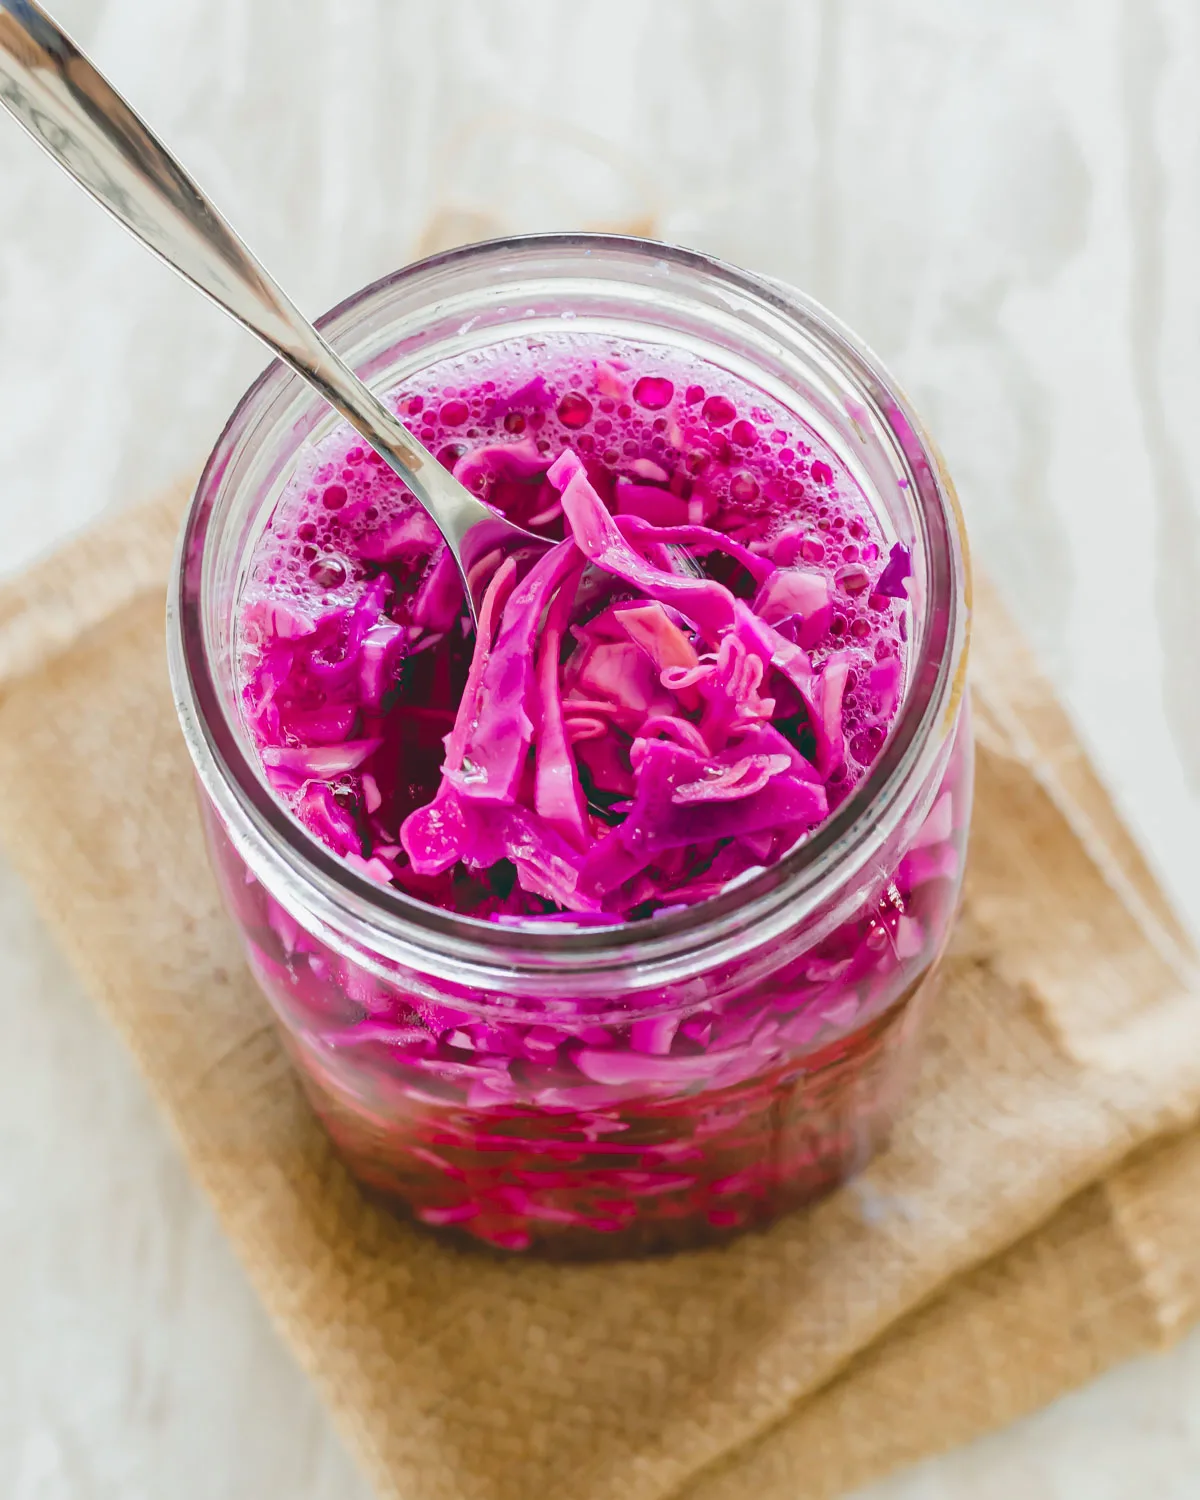 Spoon tucked into a mason jar of red cabbage sauerkraut.